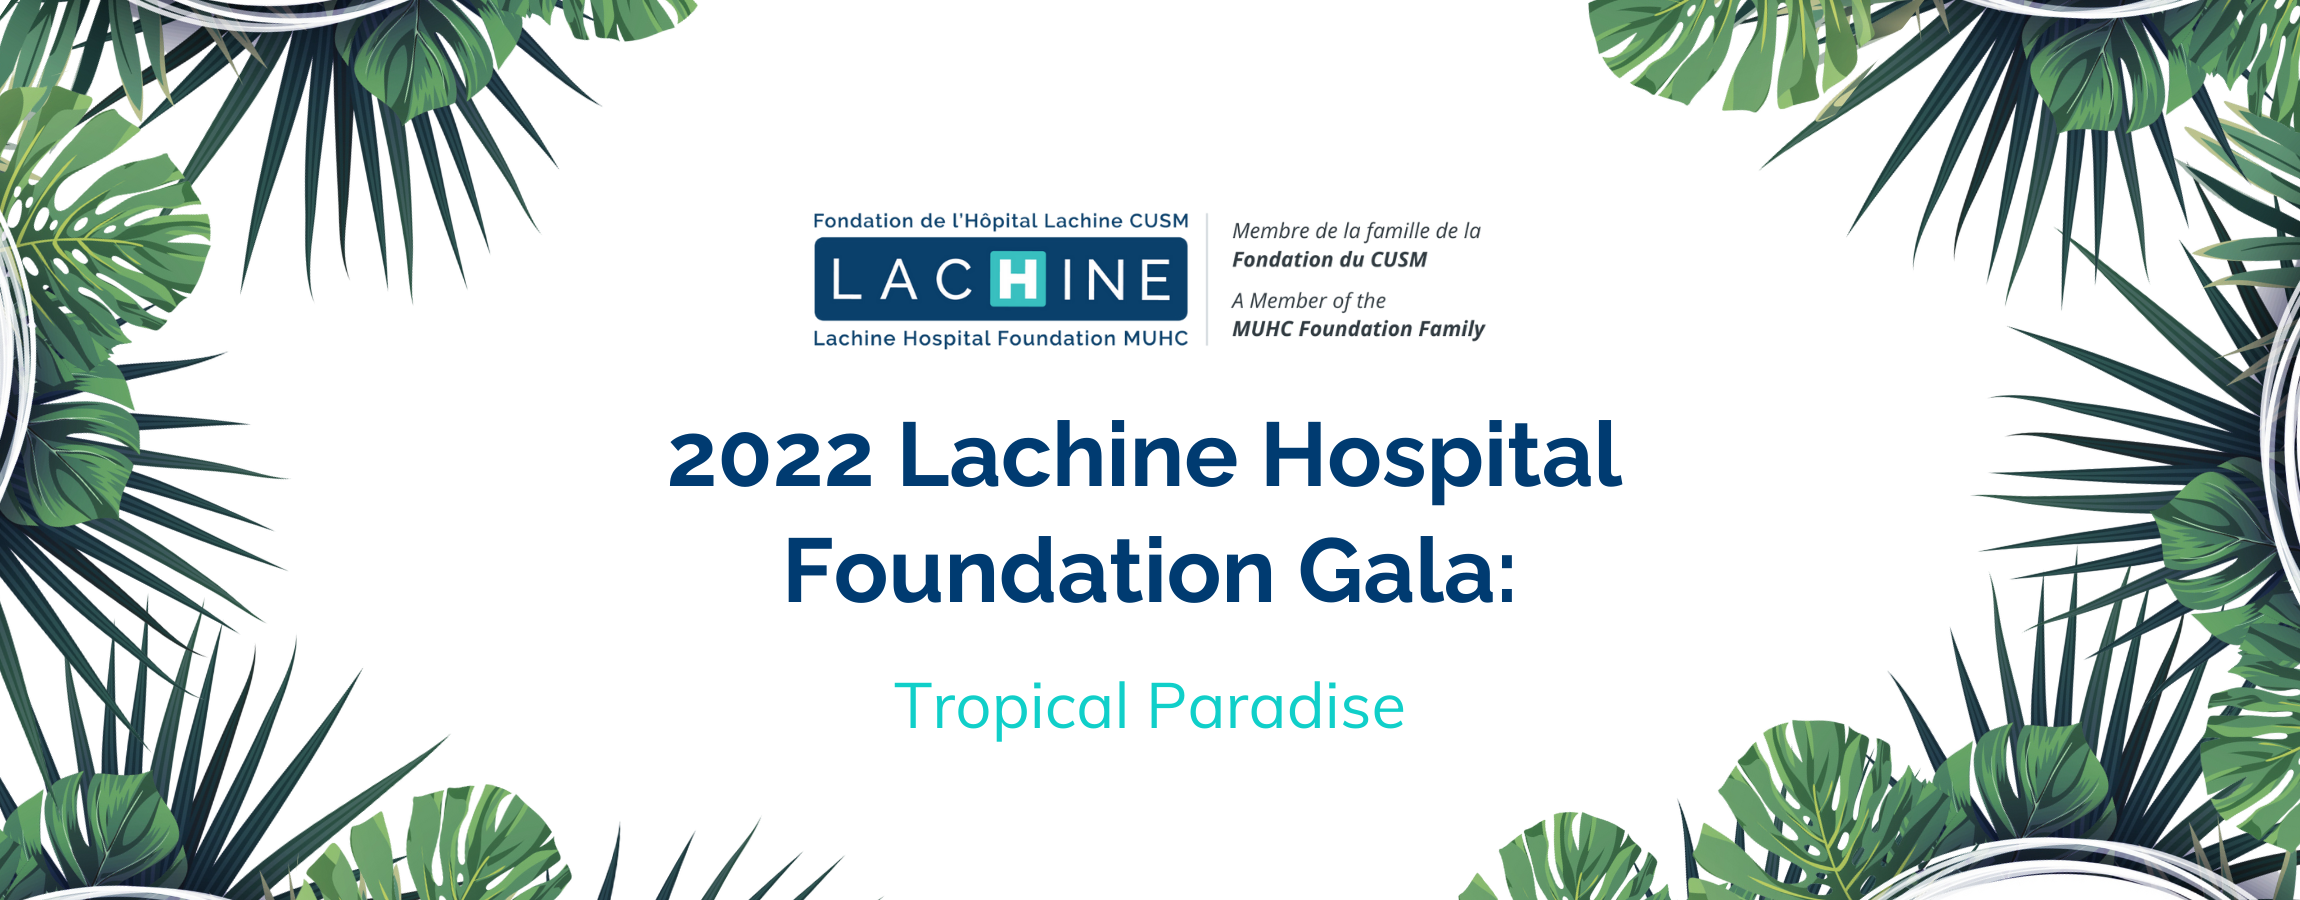 Lachine foundation gala graphic